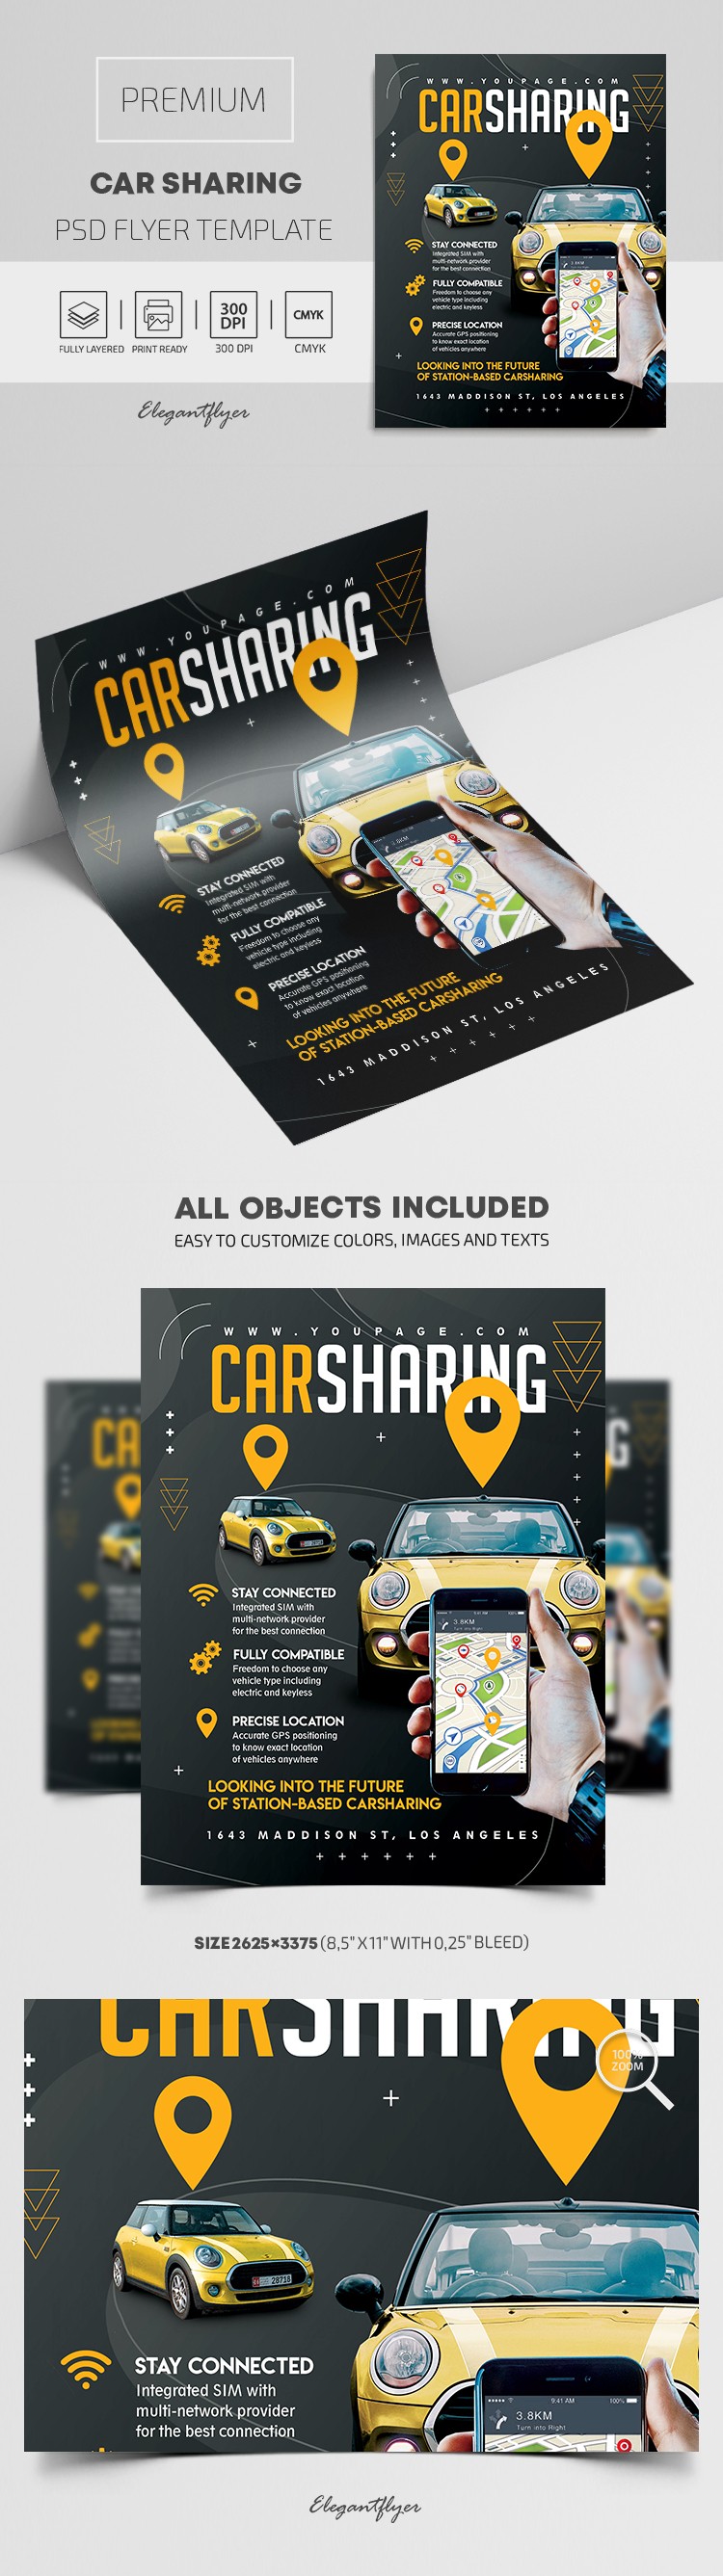 Car Sharing Flyer - Autovermietungs-Flyer by ElegantFlyer